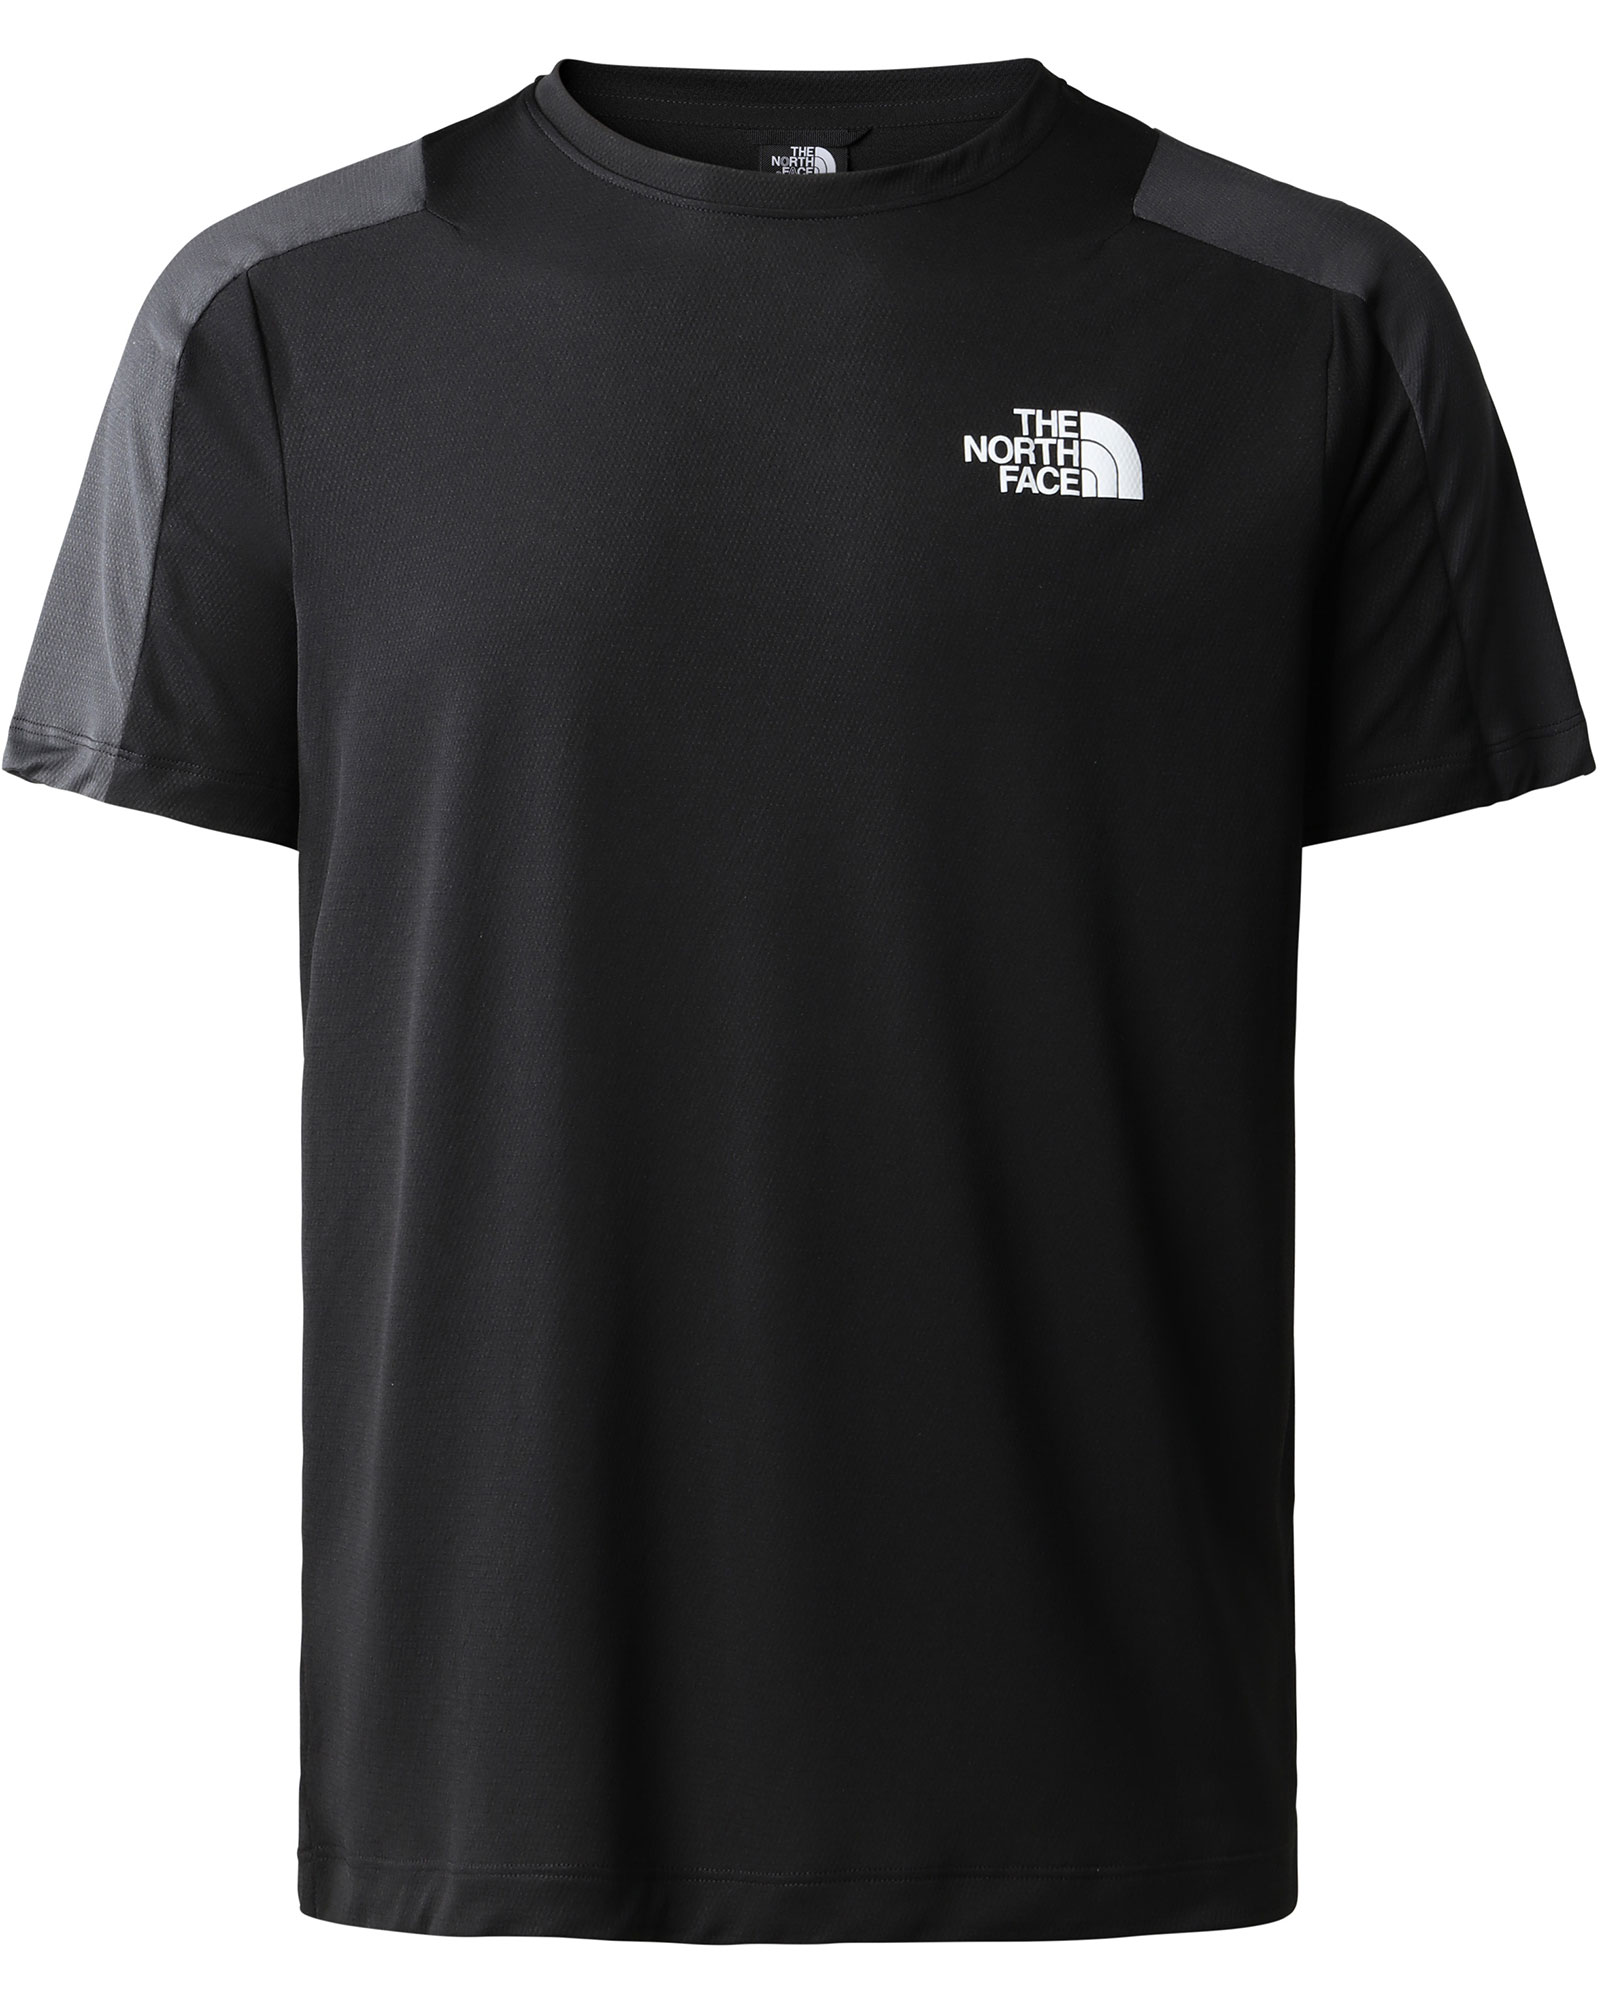 The North Face Men’s MA T Shirt - TNF Black/Asphalt Grey L